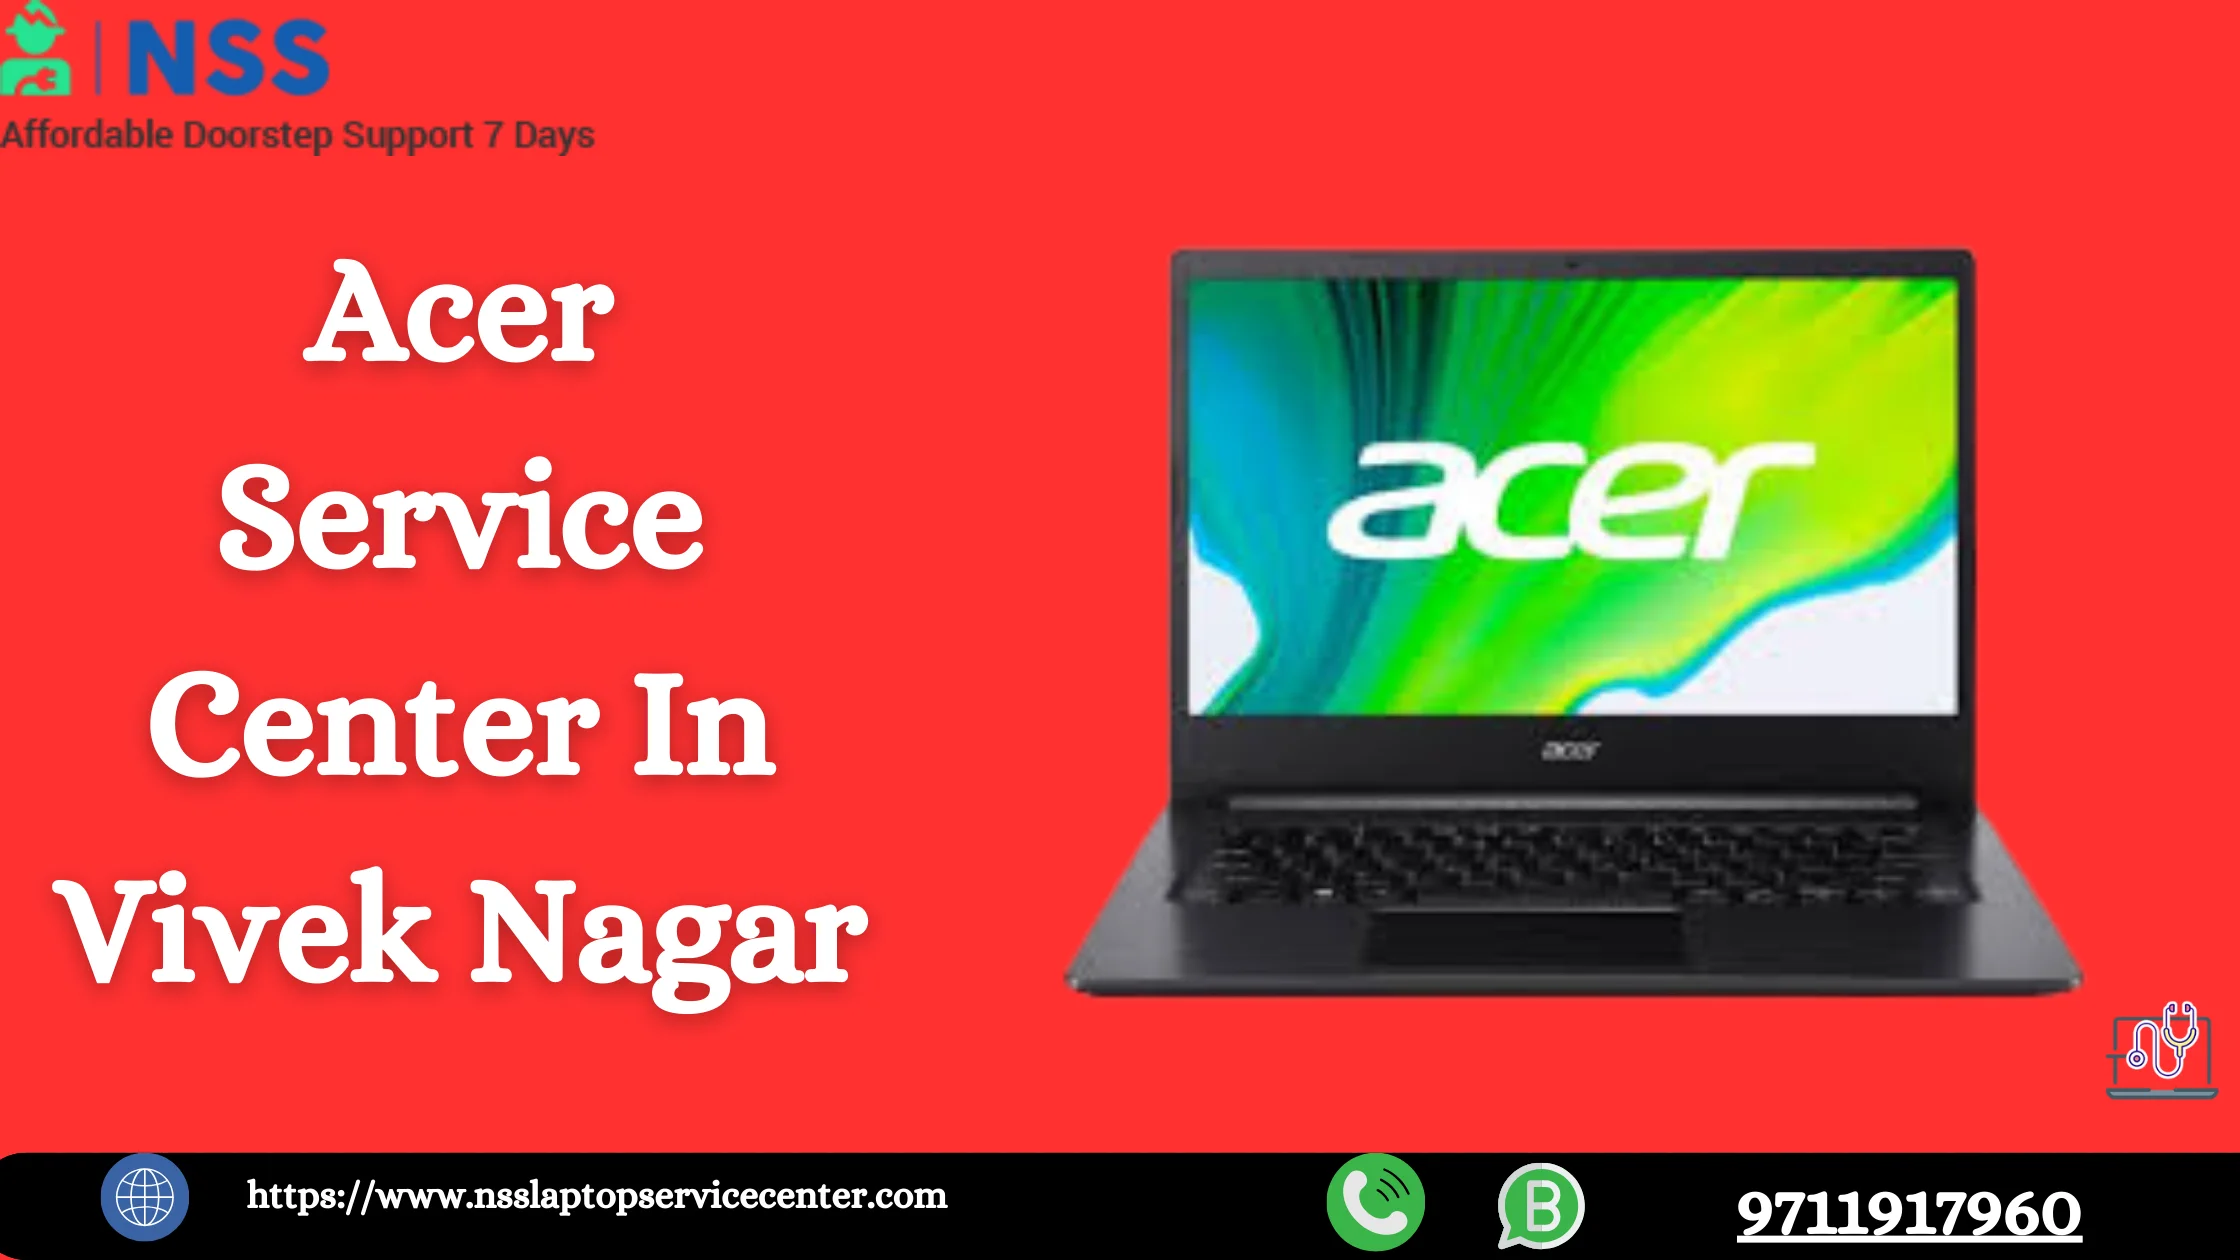 Acer Service Center in Vivek Vihar, Delhi